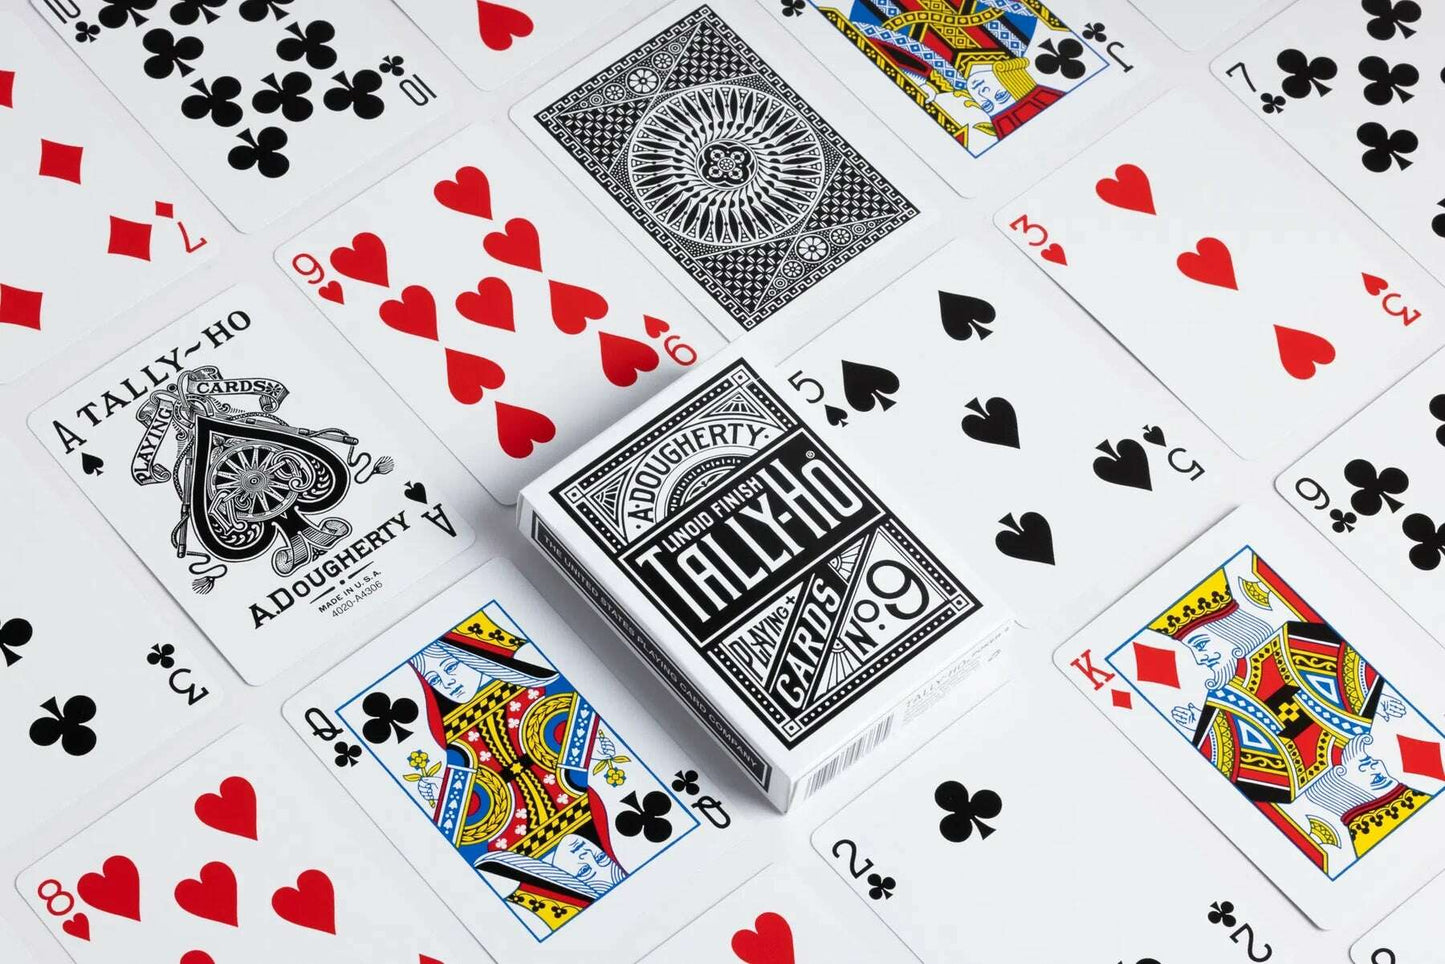 PlayingCardDecks.com-Tally-Ho Signature Black Playing Cards